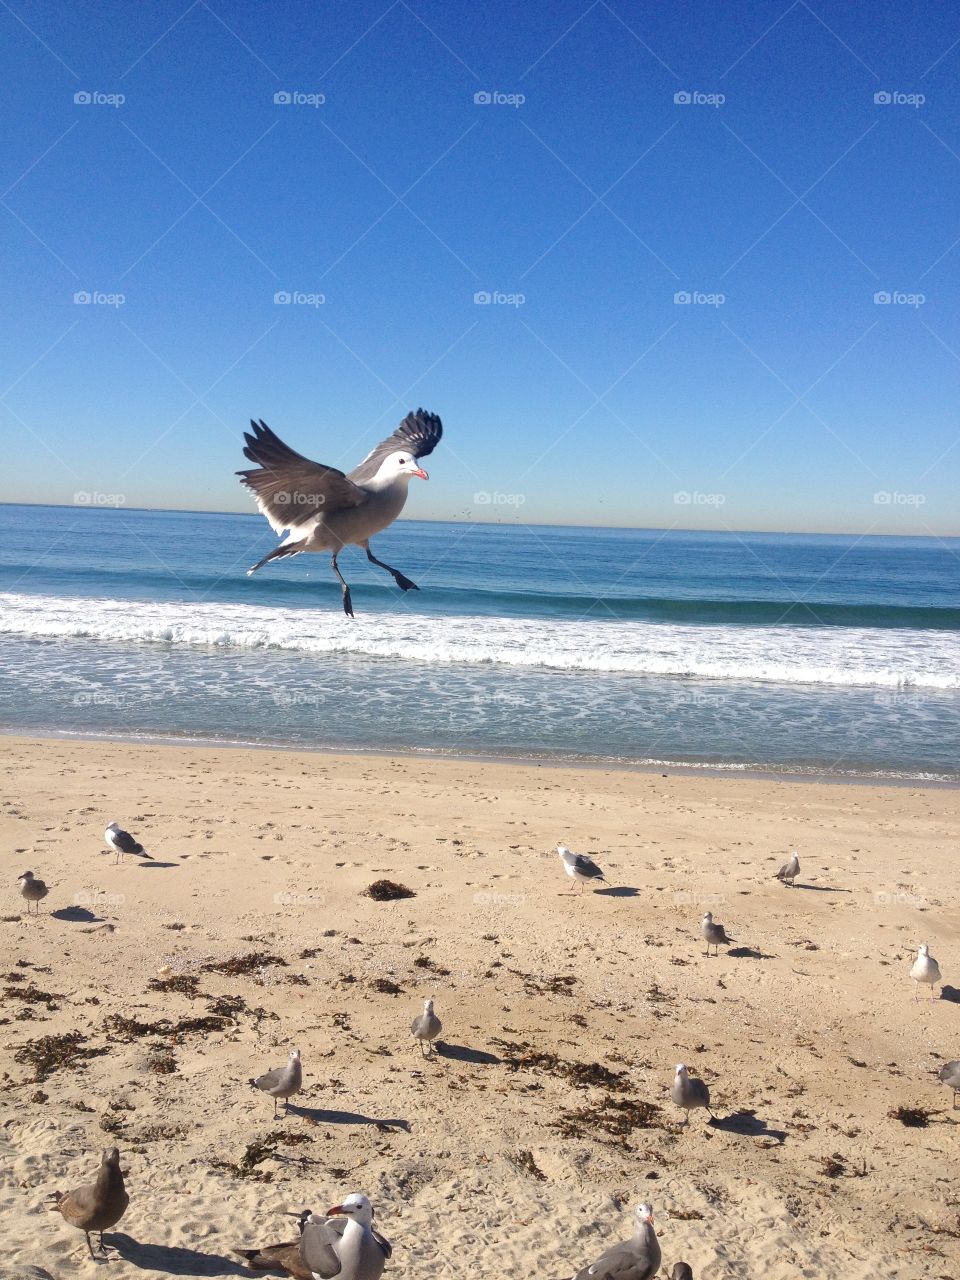 Flying seagull. Seagull on the beach